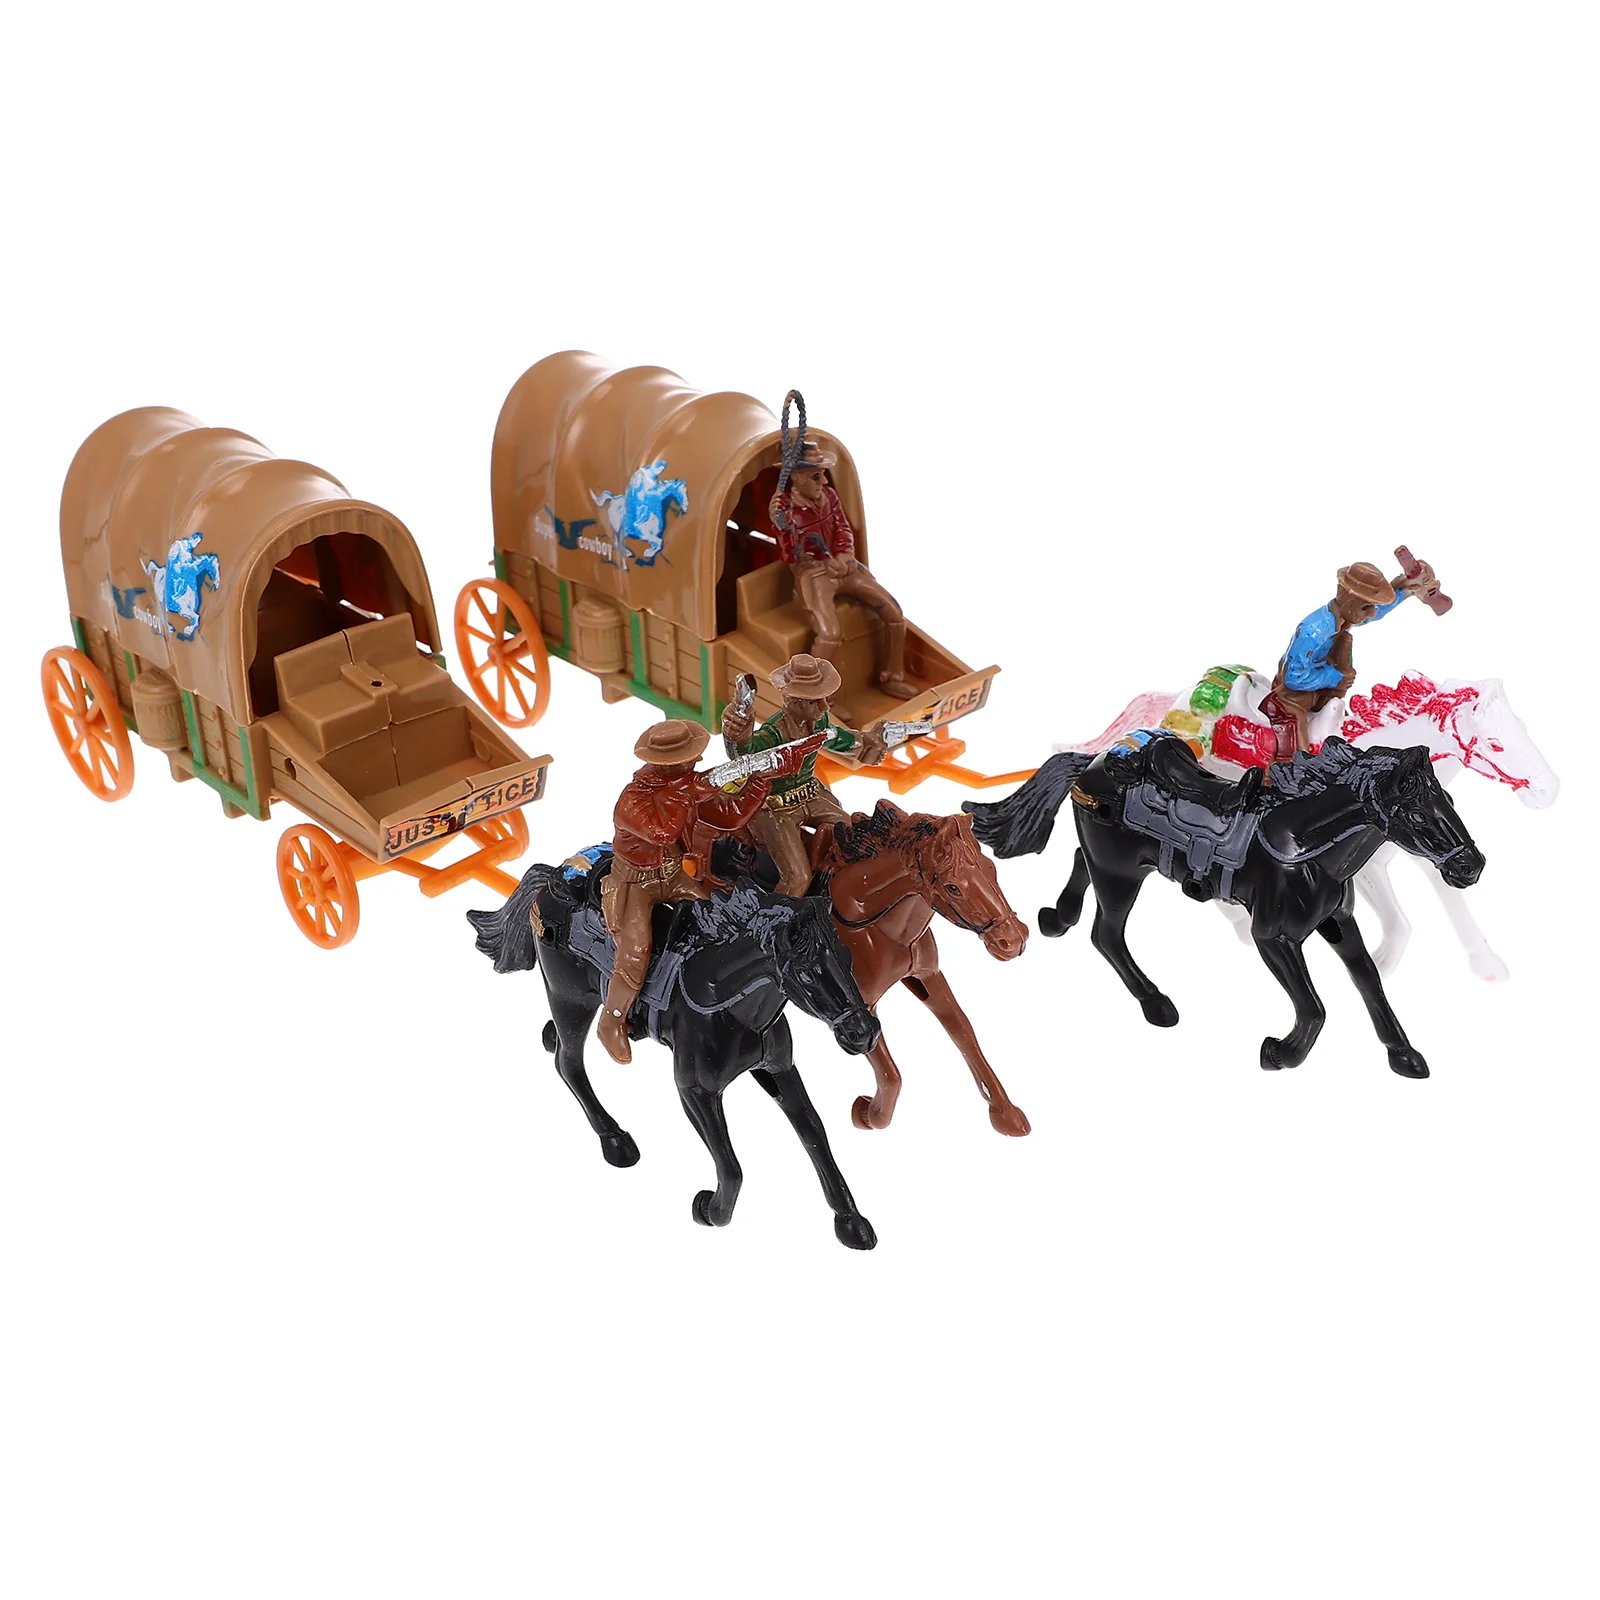 

Mini Toysvian Table Decor 2 Set Roping Cowboy Horse Mini Toys Playset West Cowboy Carriage Models Plastic Figures Playset